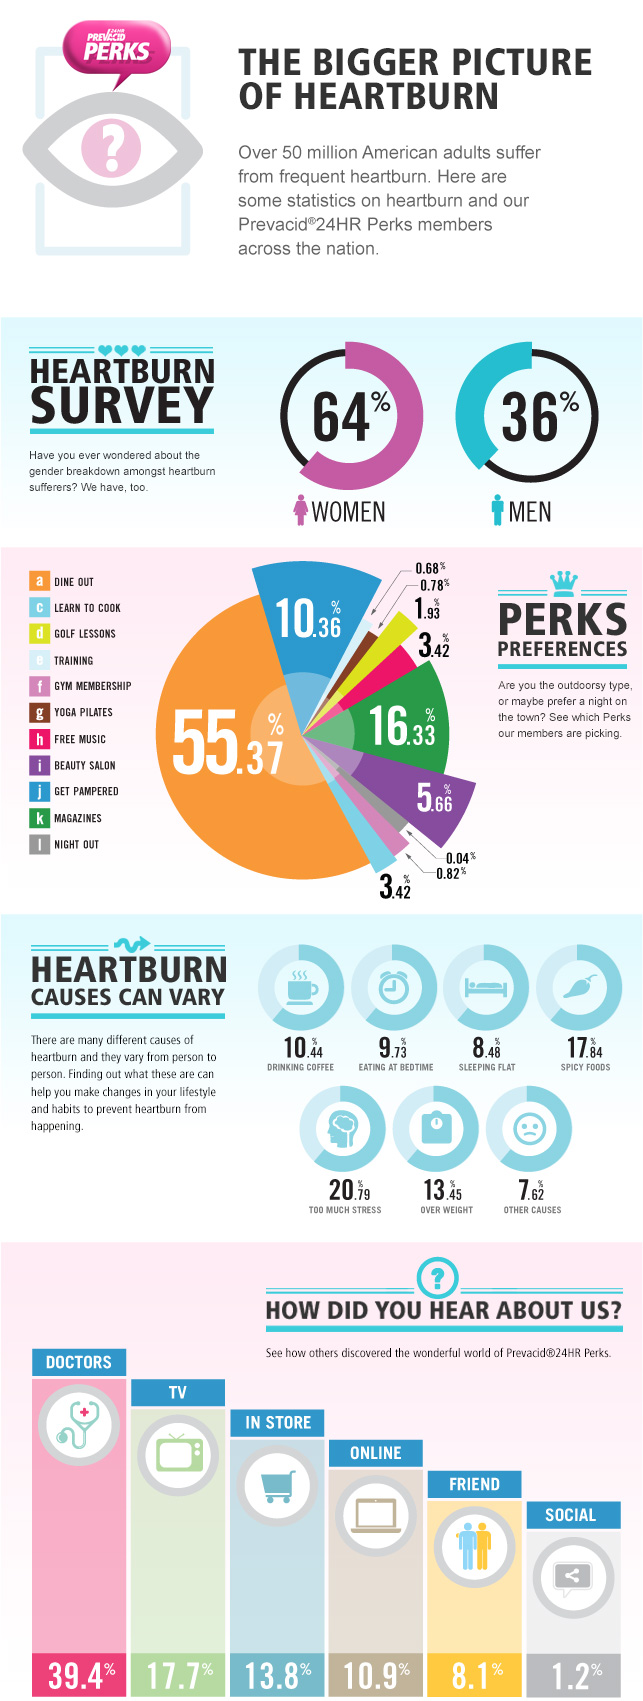 Heartburn Trends and Statistics